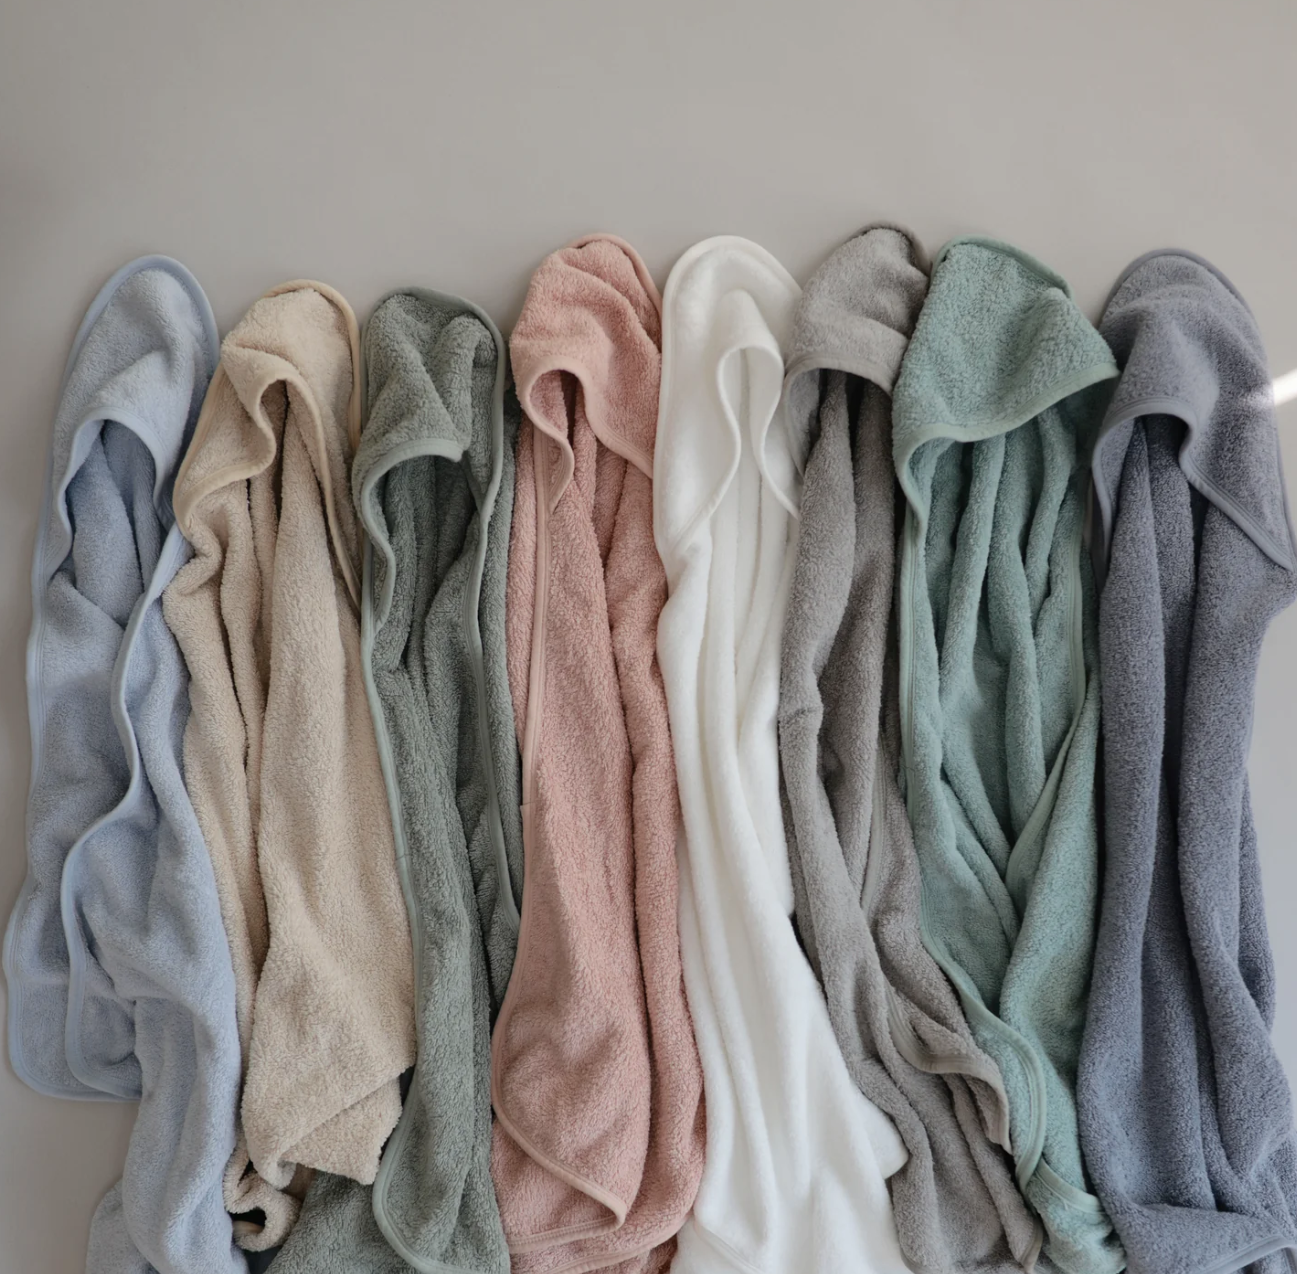 Organic Cotton Hooded Towel